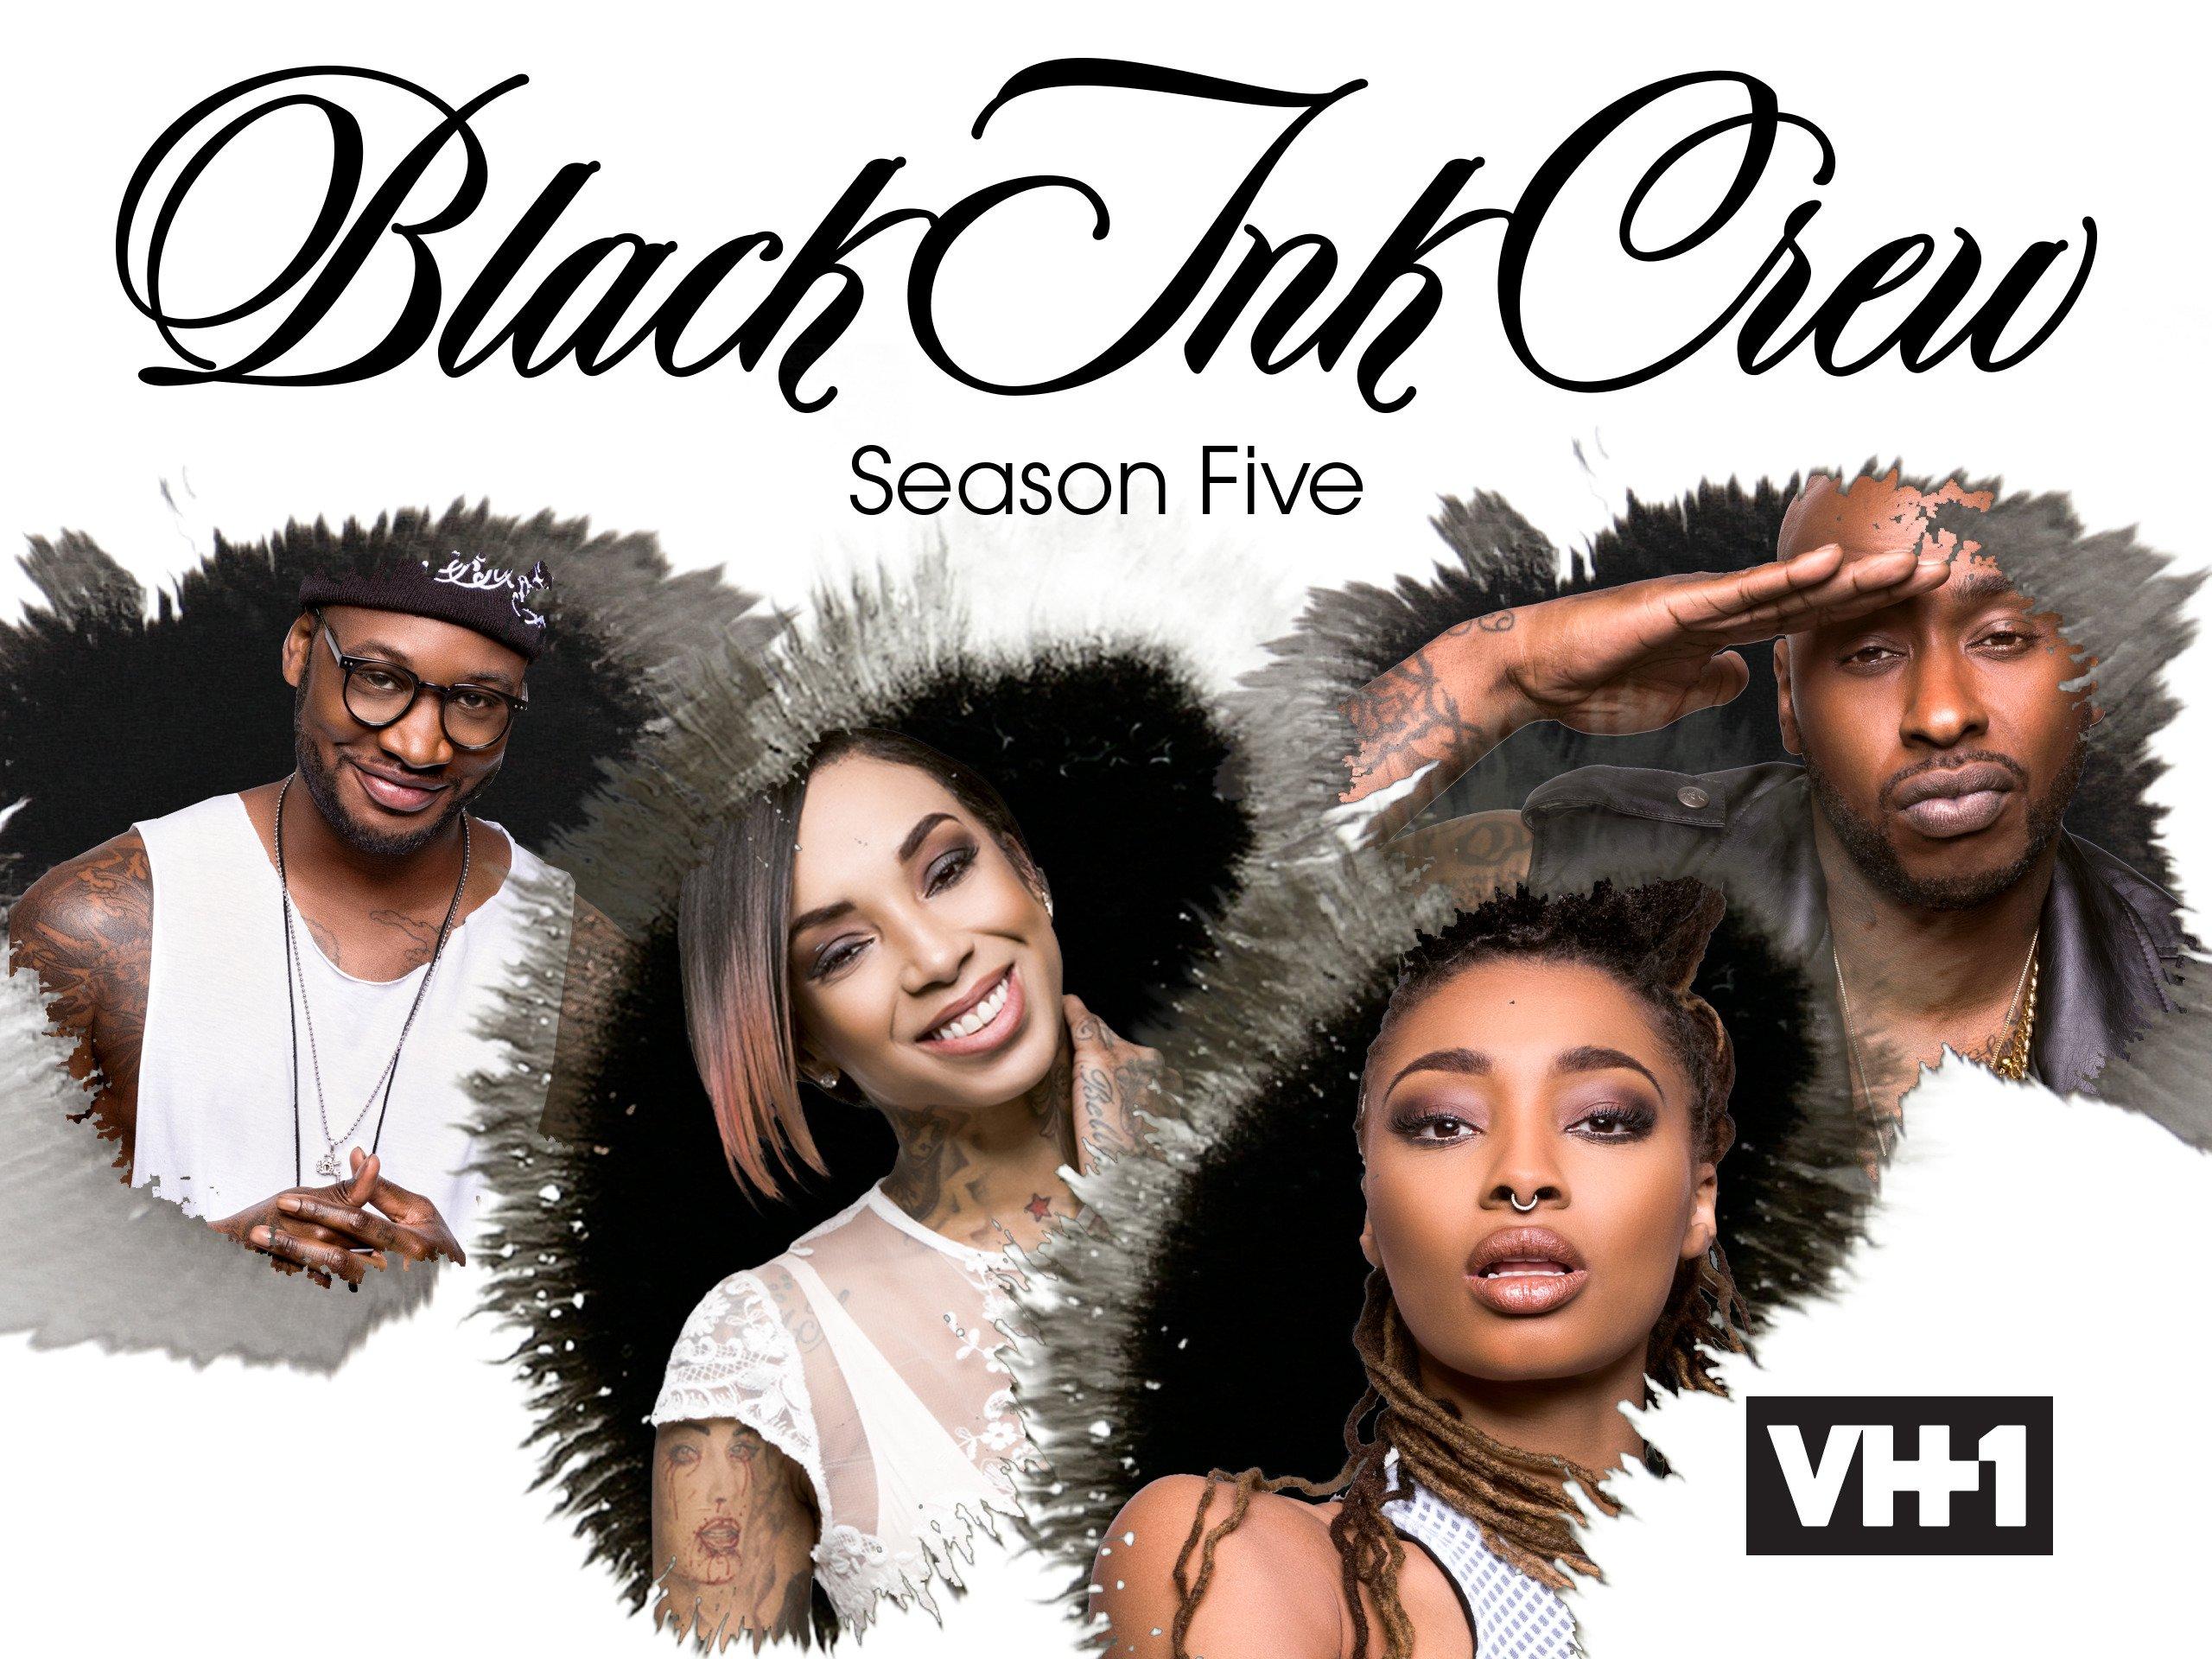 black ink crew new york cast